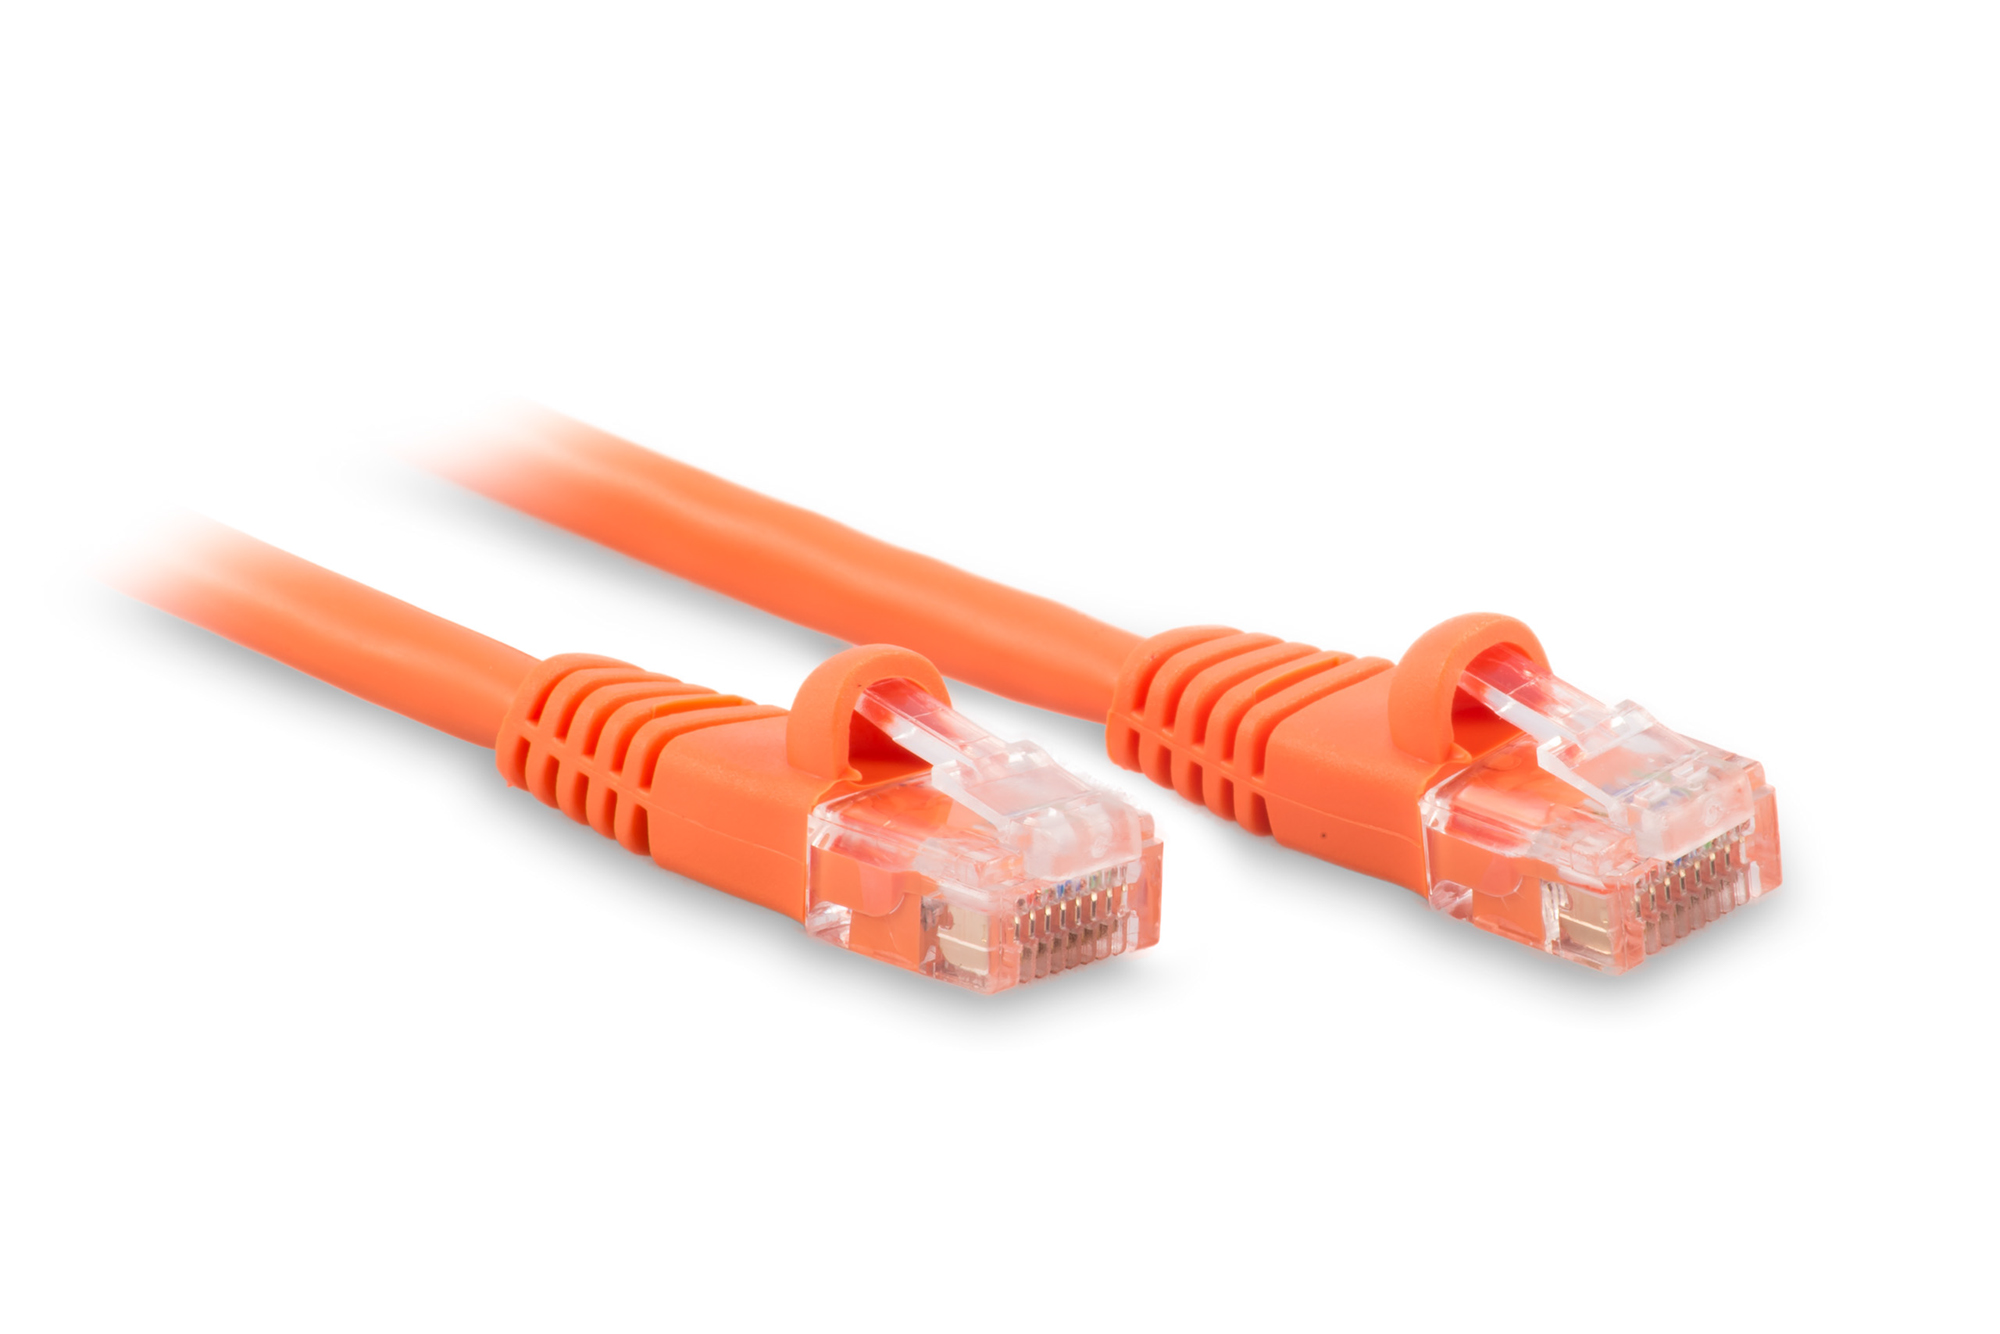 25ft Cat6 Ethernet Patch Cable - Orange Color - Snagless Boot, Stranded, RJ45, 550Mhz, 24AWG